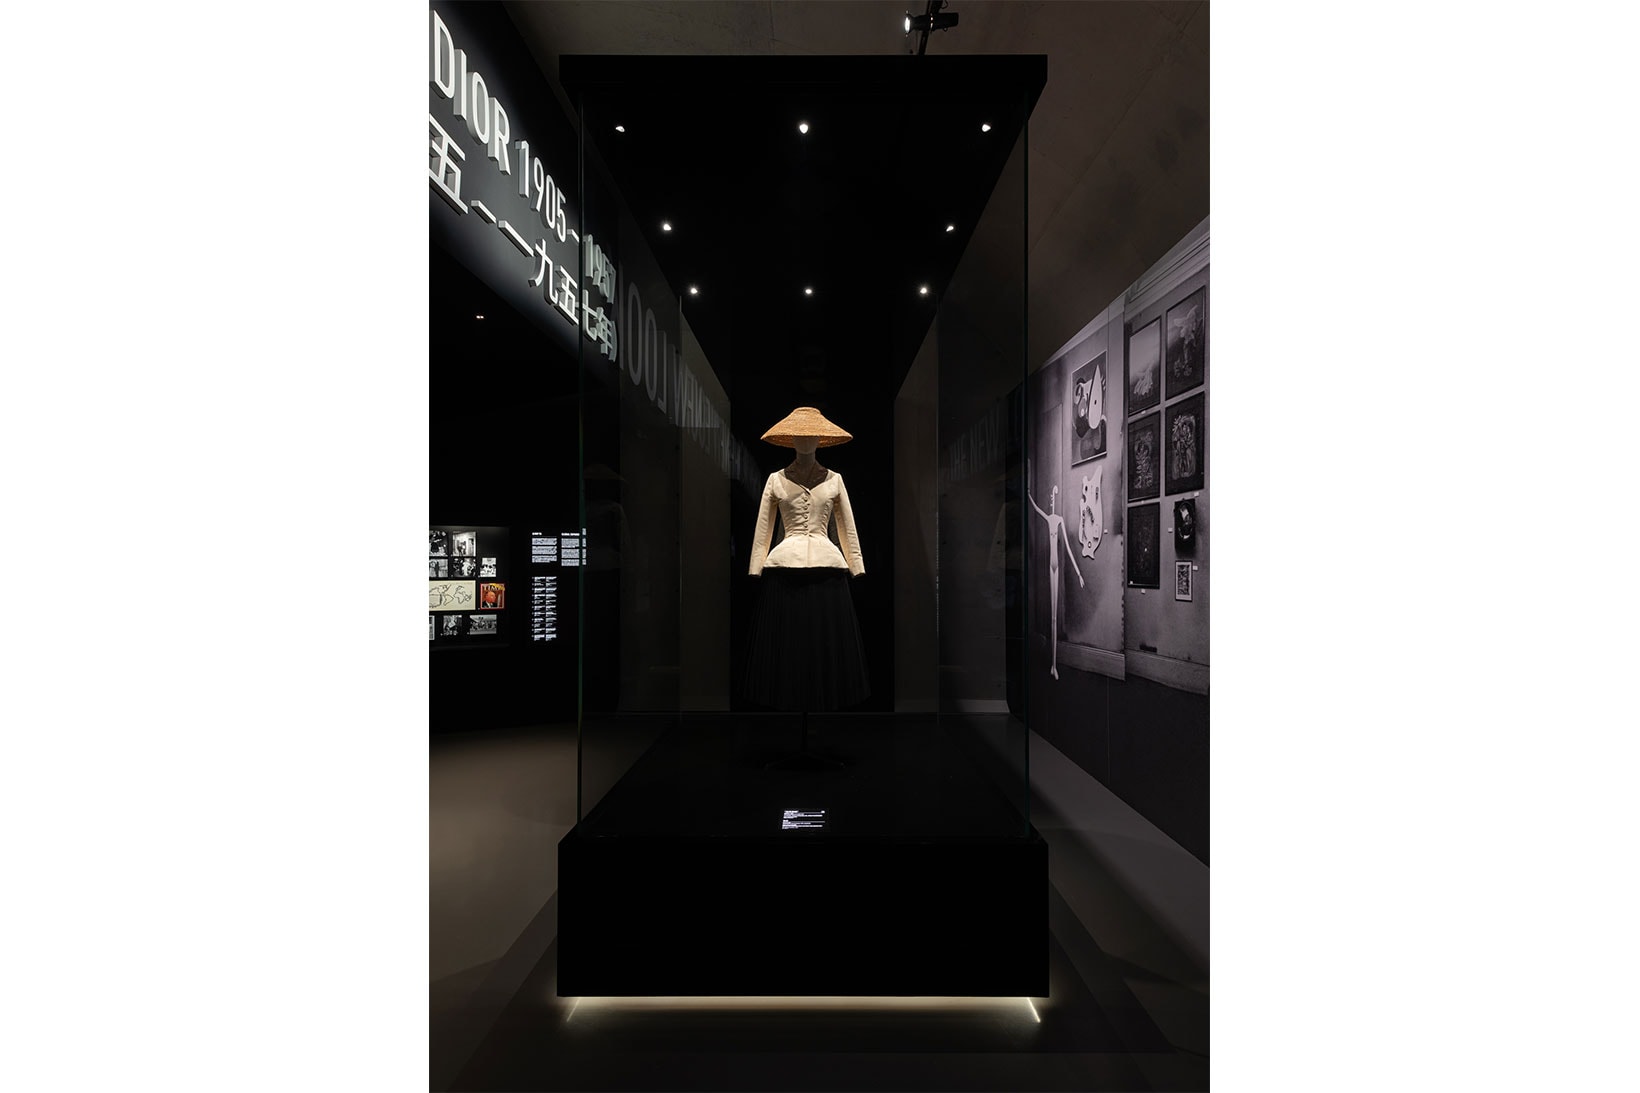 dior exhibition shanghai christian designer of dreams long museum date maria grazia chiuri fashion china 